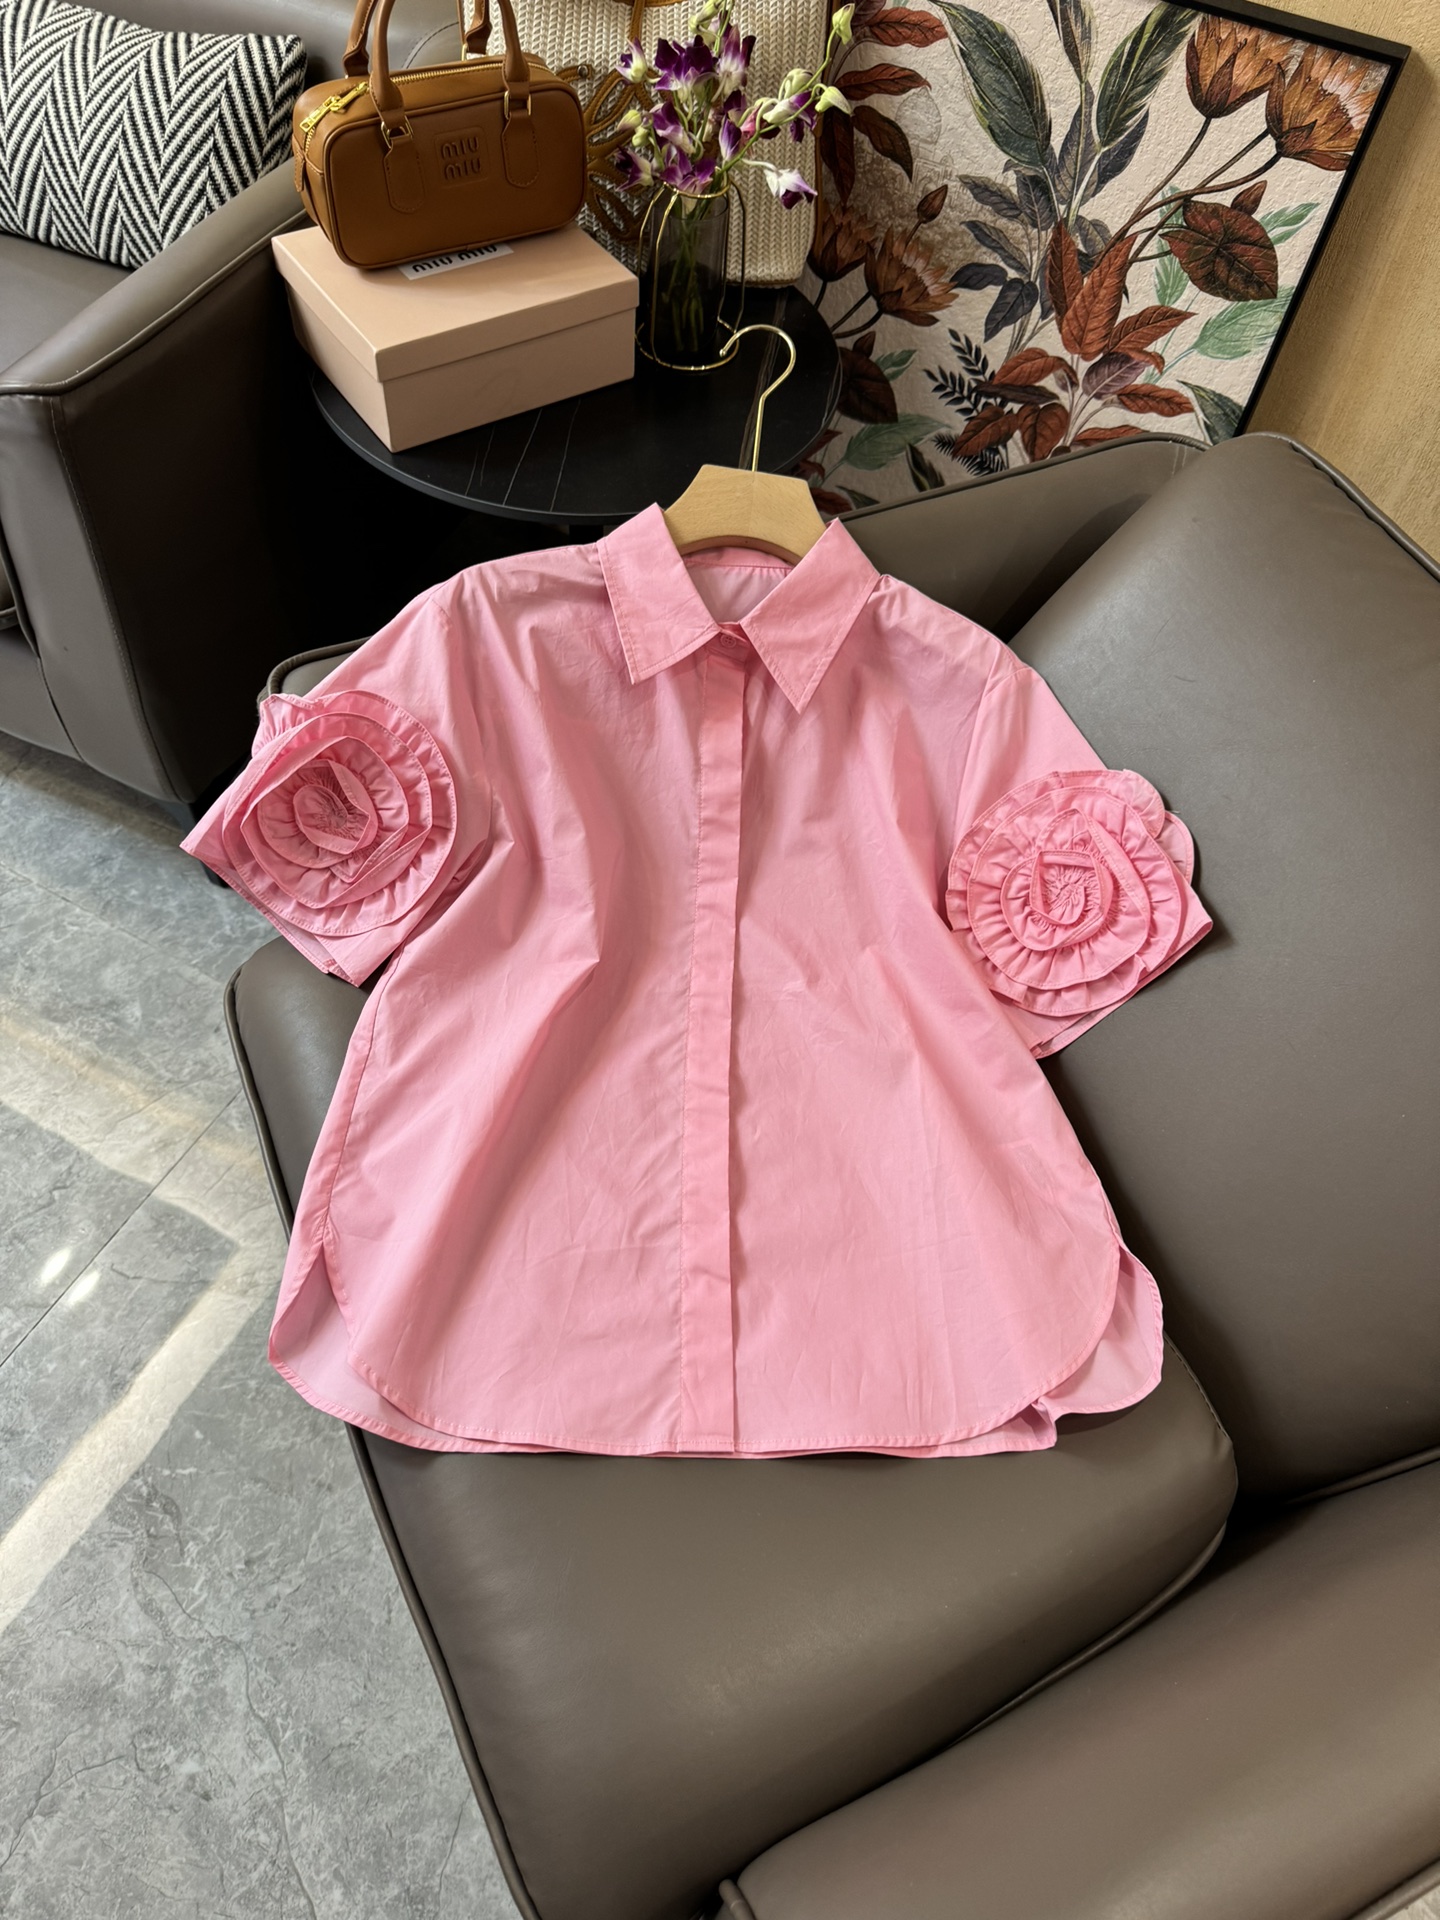 CS026#新款衬衫⚠️Pzzdqd????\nValentino 花朵玫瑰短袖衬衫 白色 粉色 红色 蓝色 SML